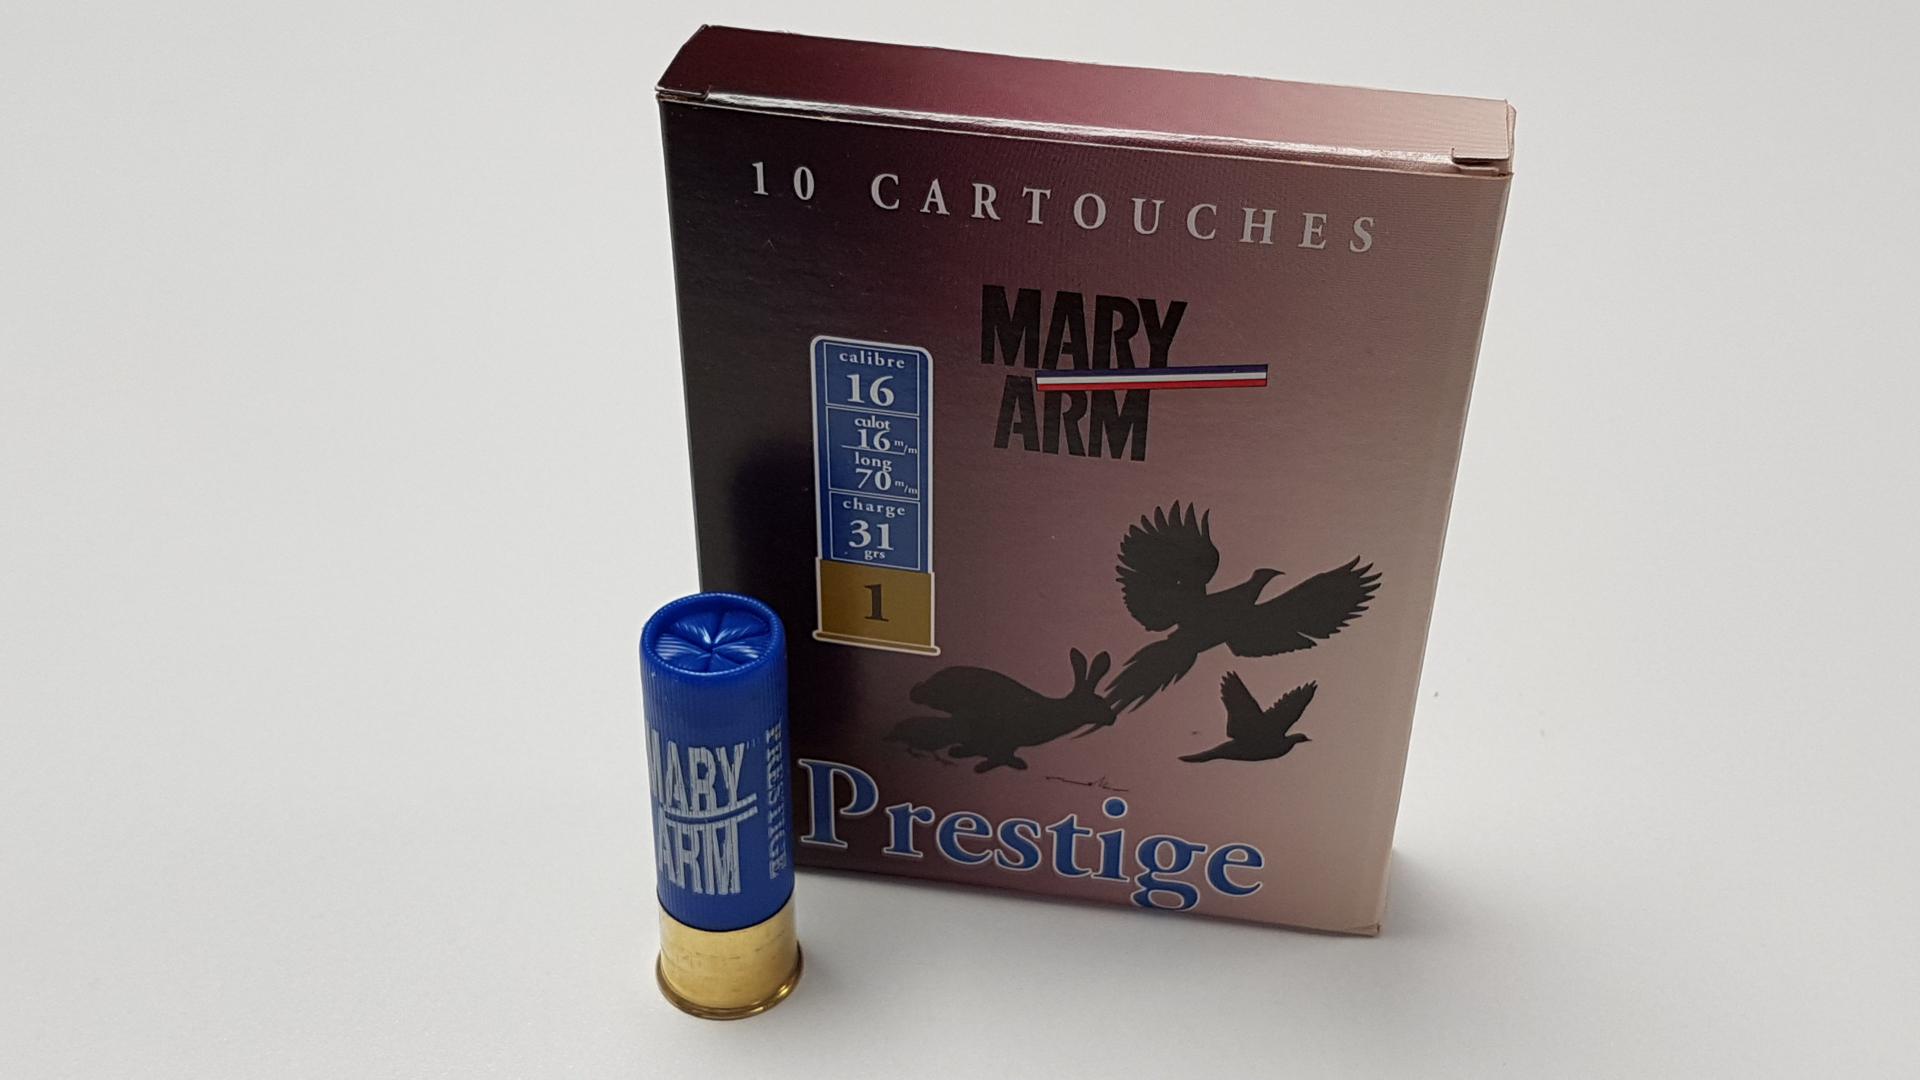 CARTOUCHES MARY ARM PRESTIGE CAL 16/70